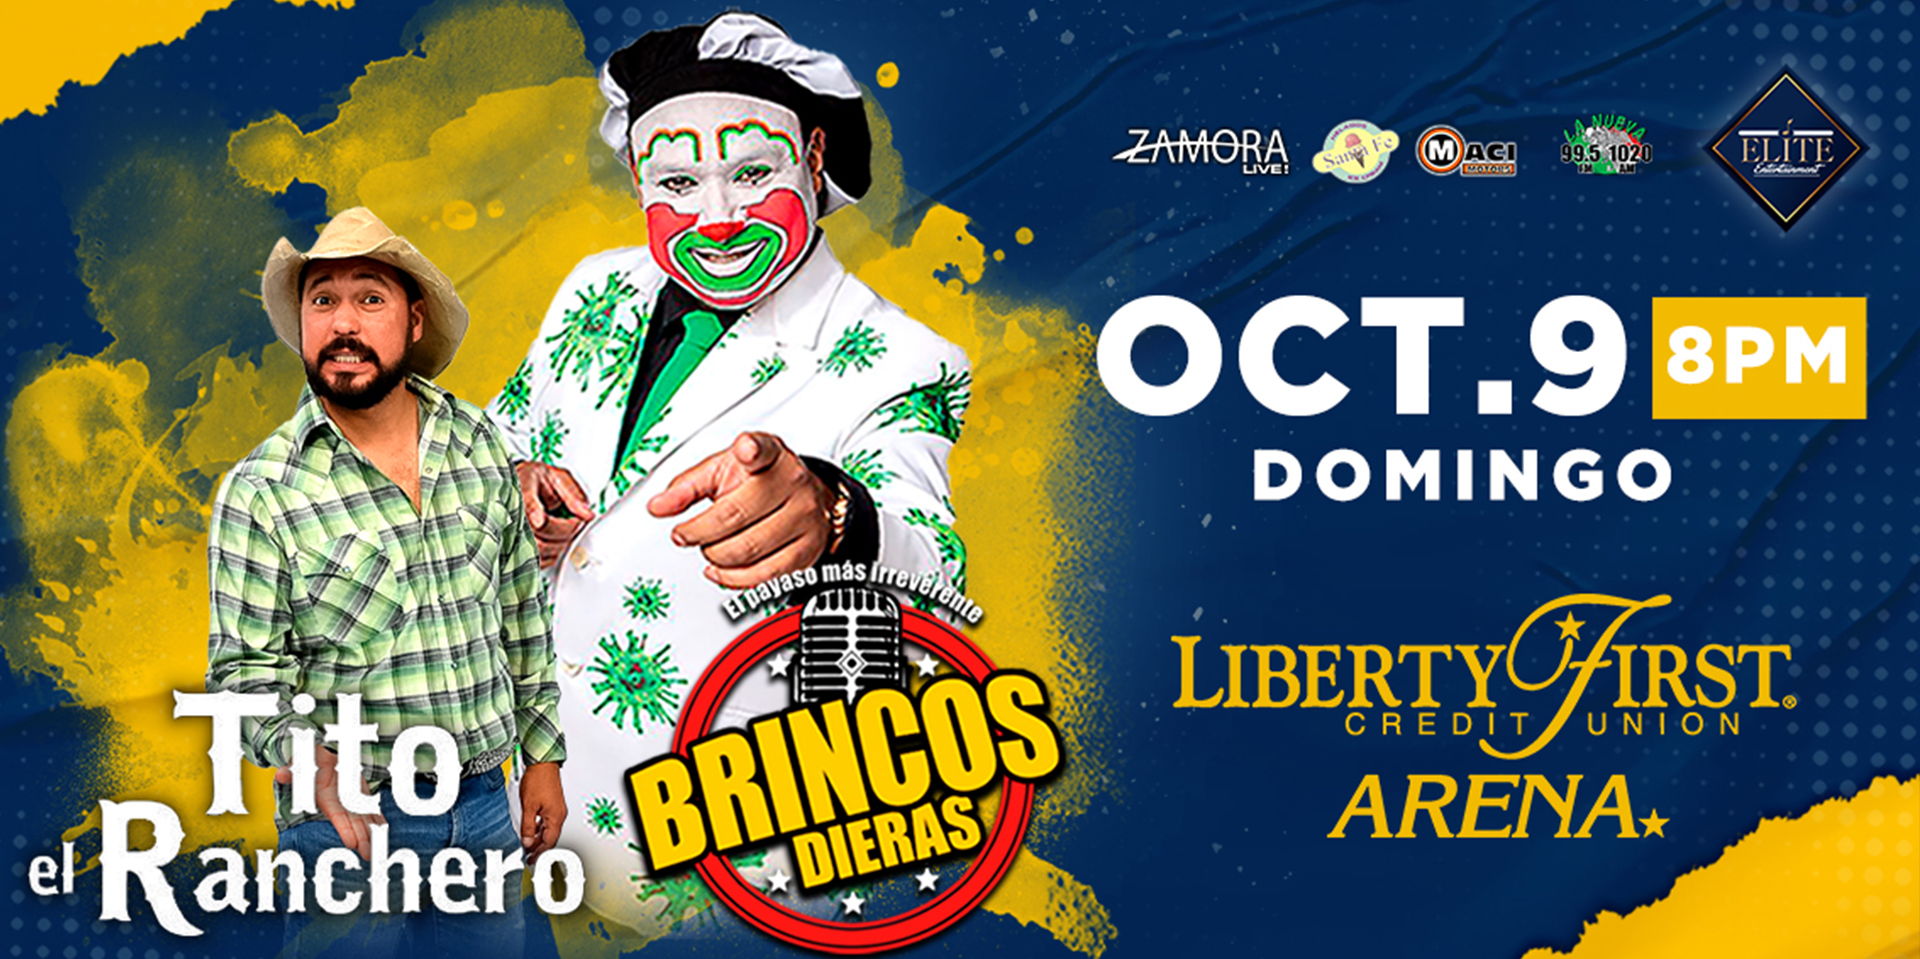 Zamora Live - Brincos Dieras promotional image